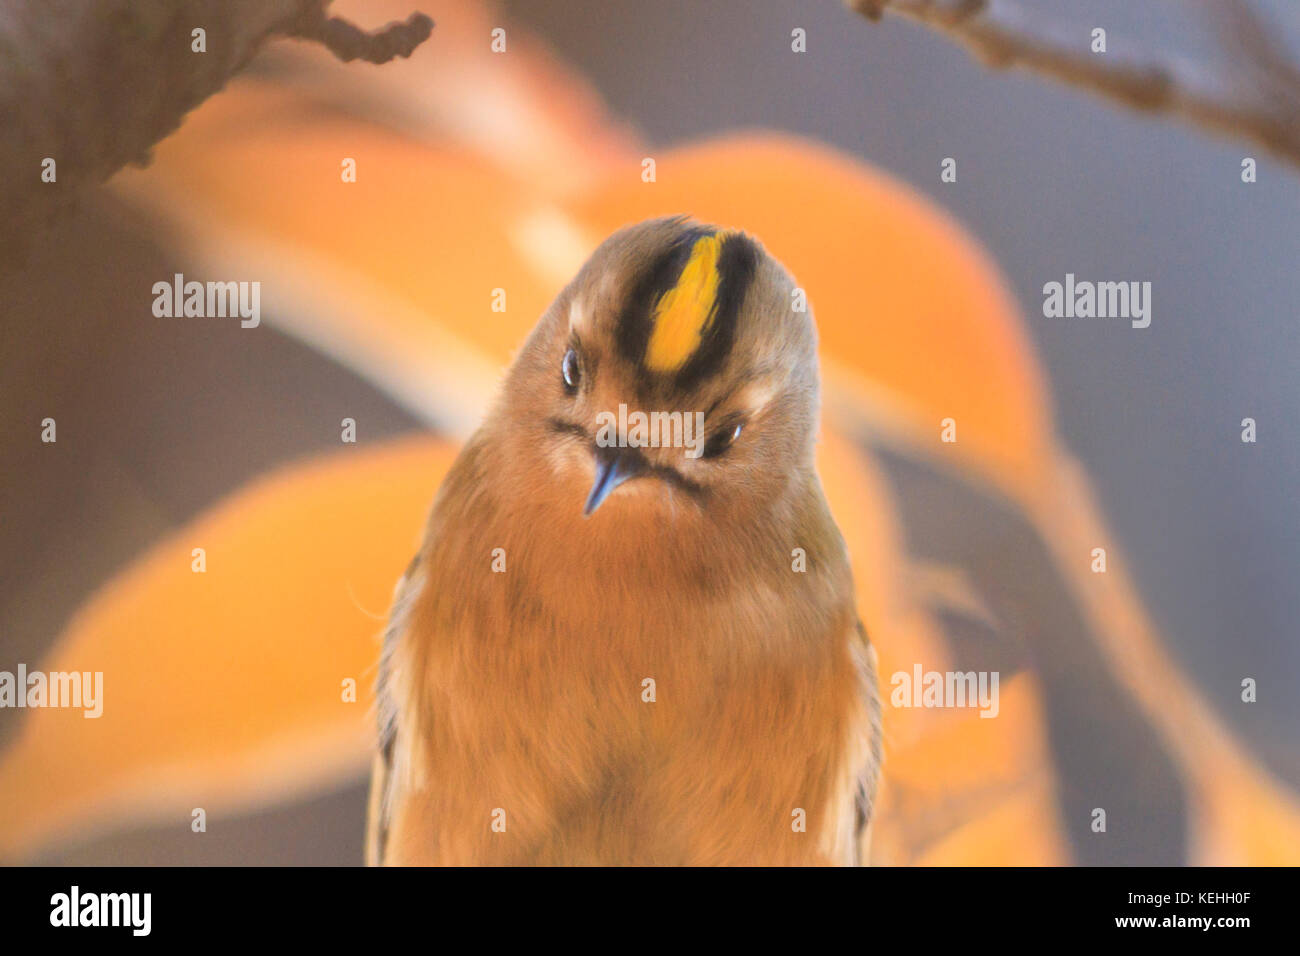 nice muzzle birds with yellow crest Stock Photo